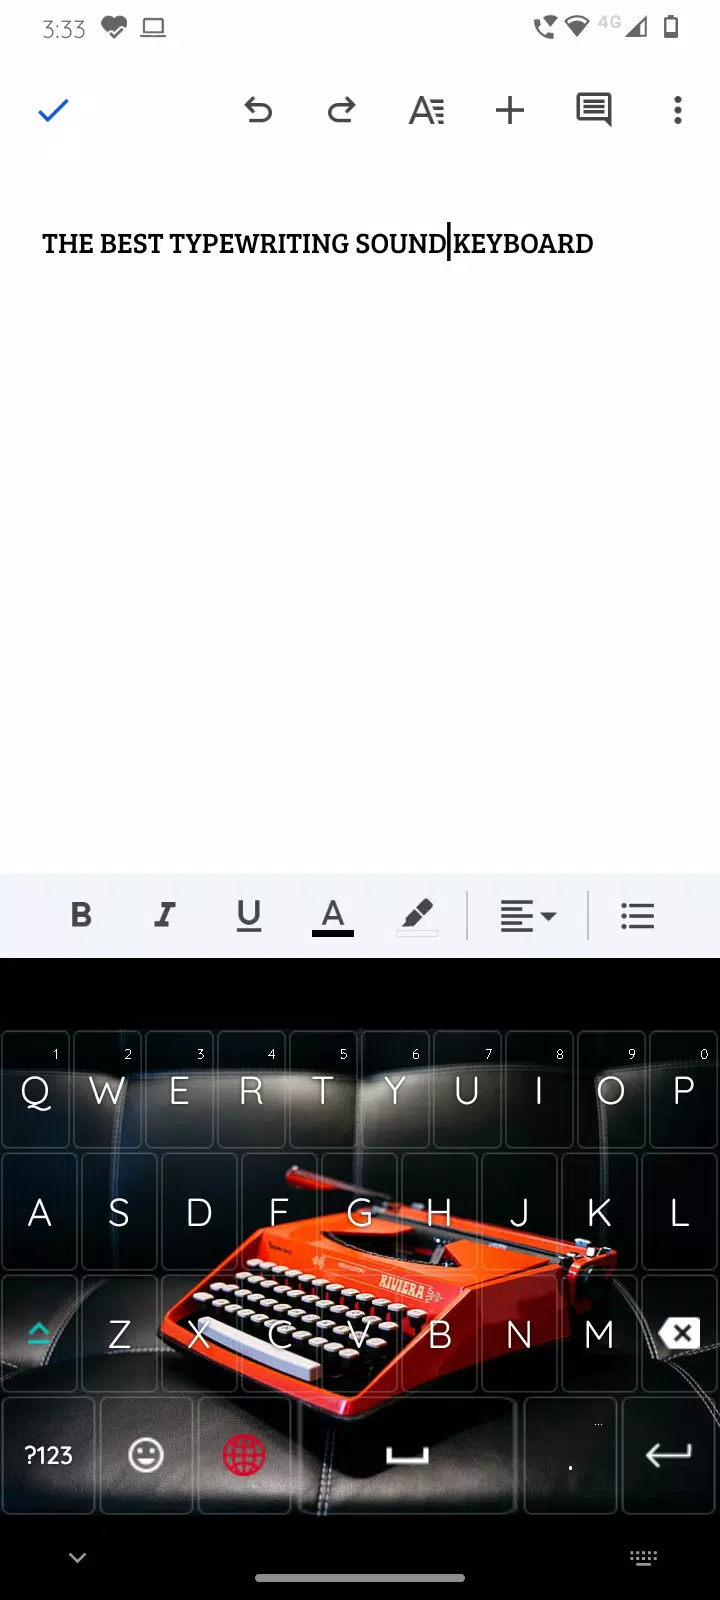 Typewriter Sound Keyboard APK for Android Download